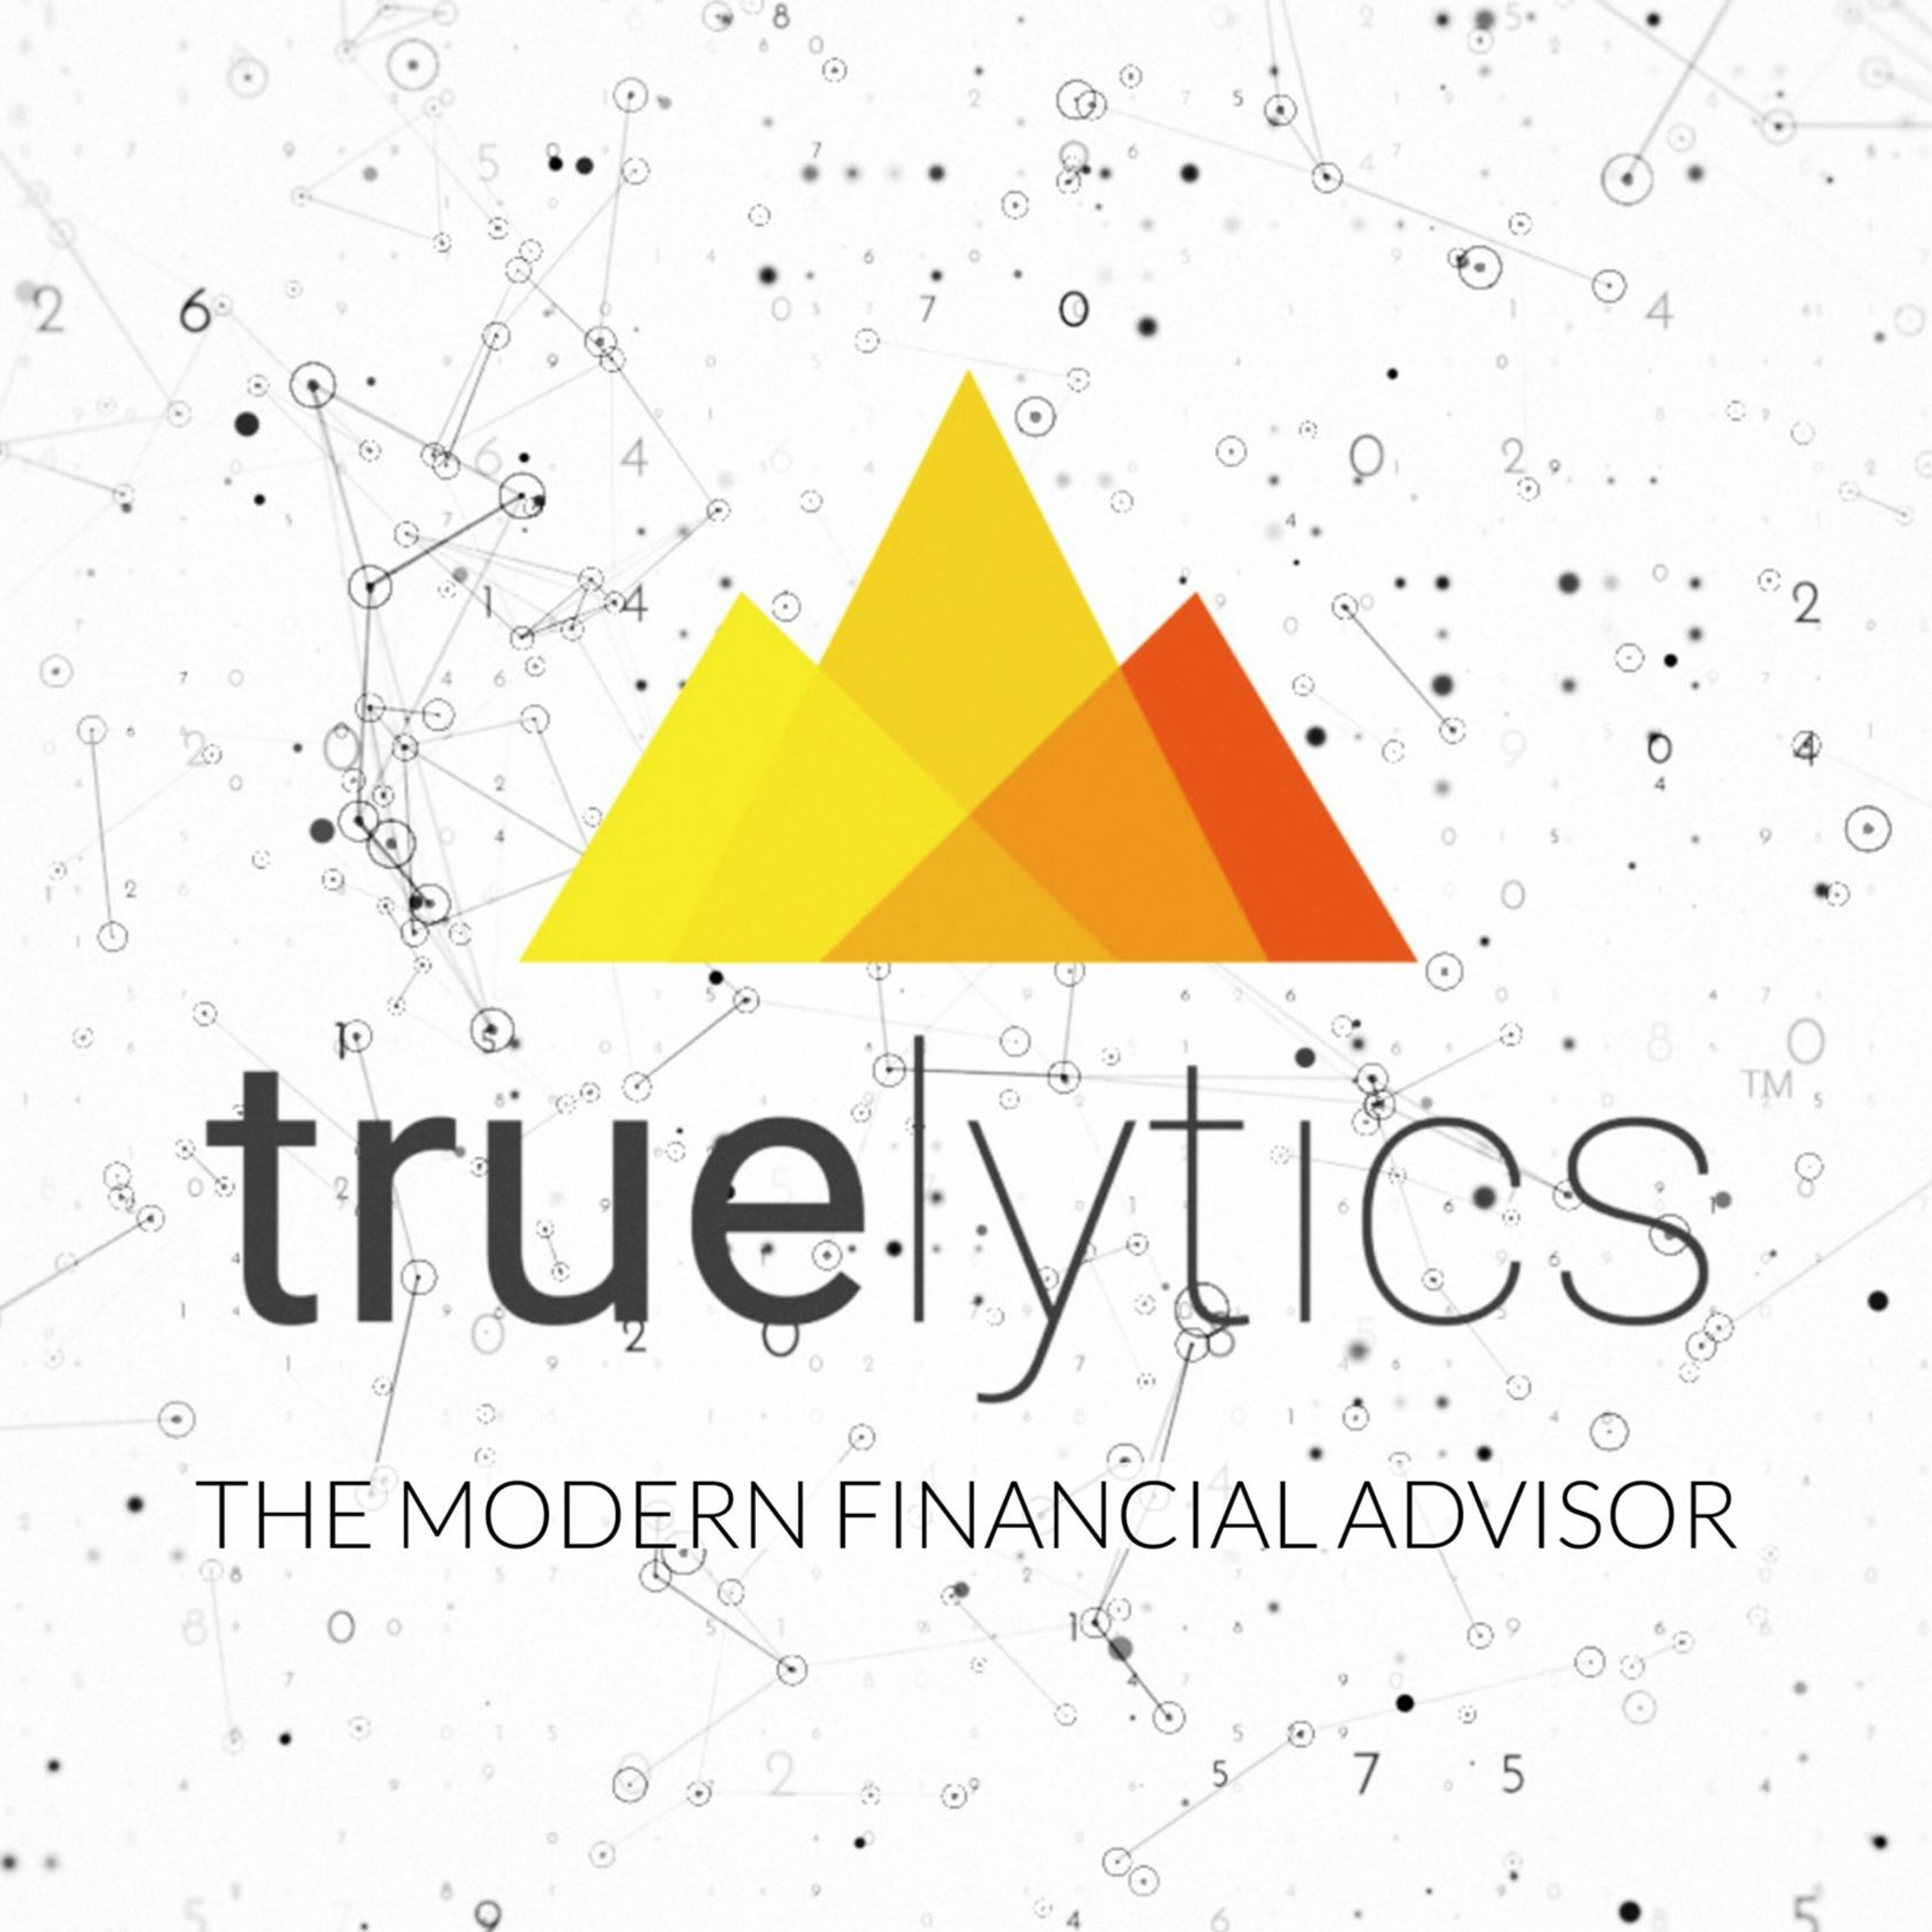 Episode 54 - Jeremi Karnell and Scott Wetzel on Financial Advisor Transition Trends